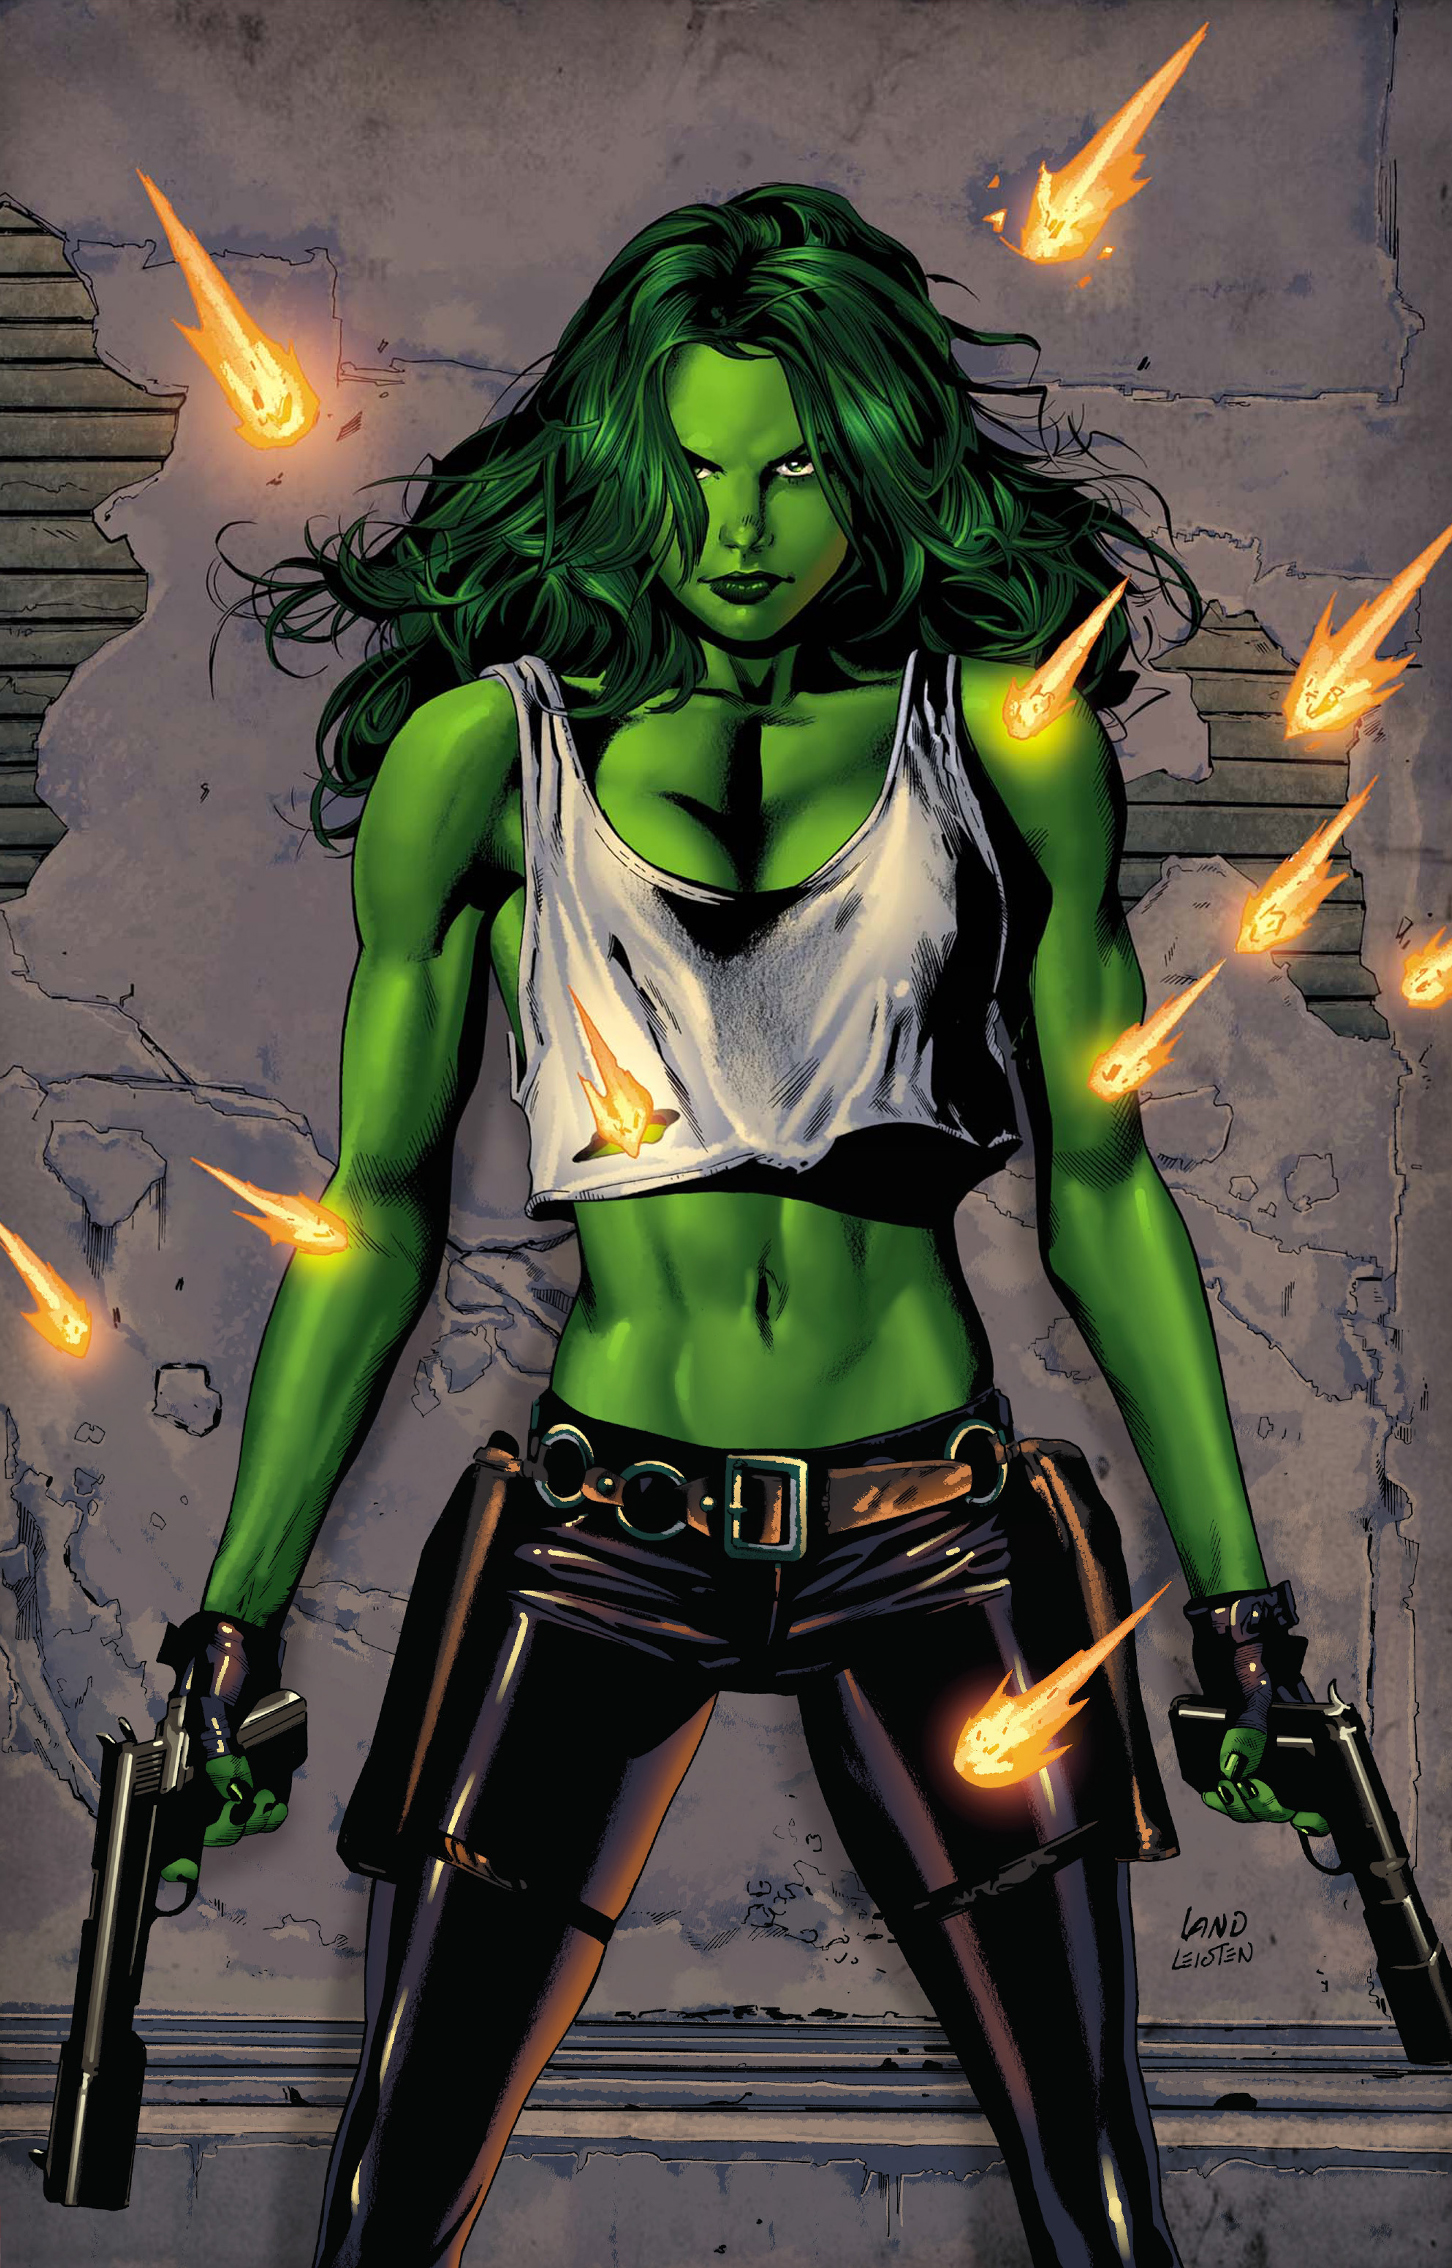 Hulk she Marvel: Every